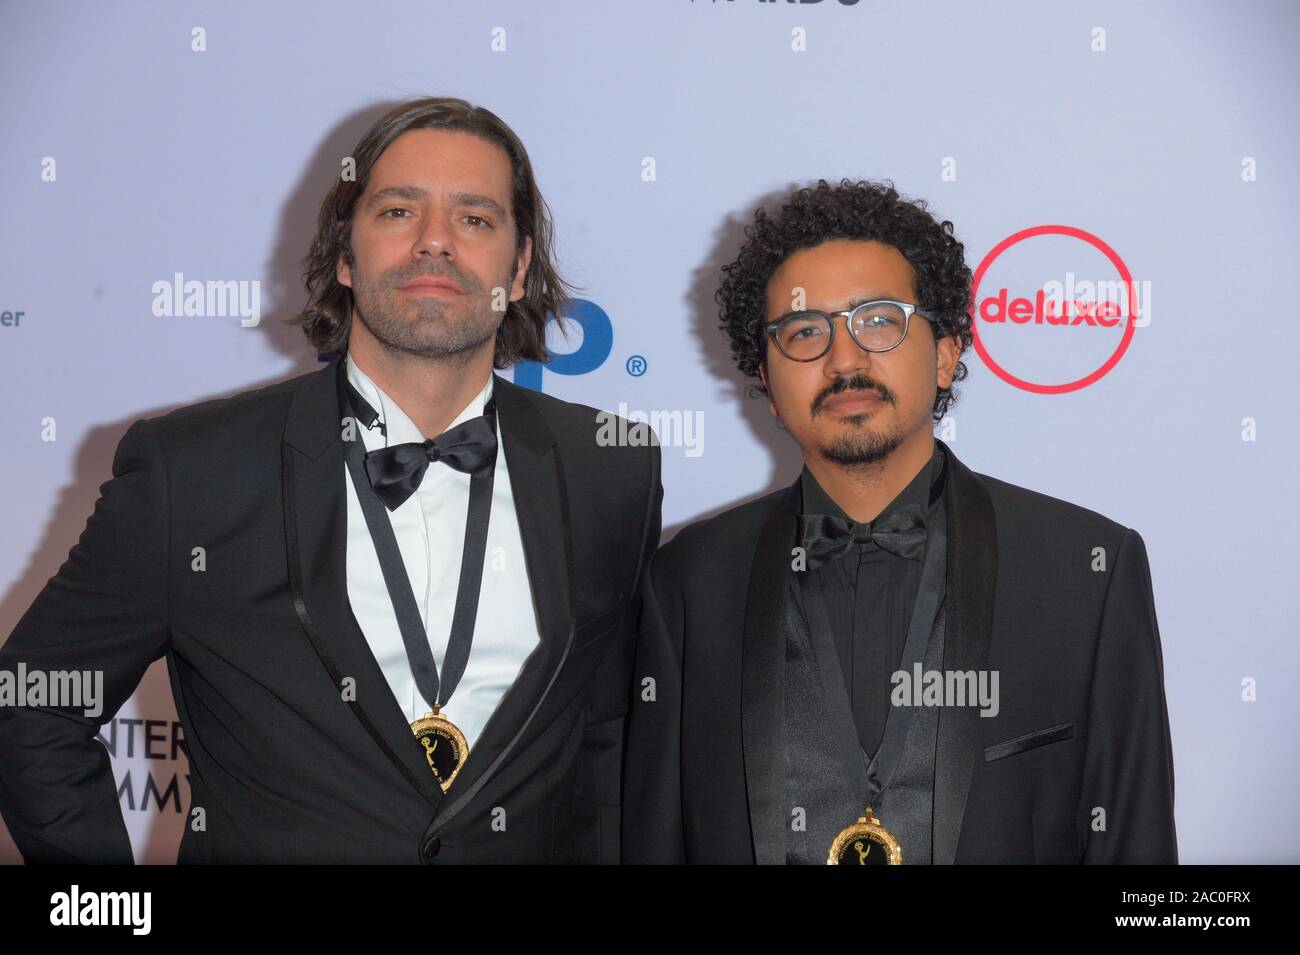 NEW YORK, NY - NOVEMBER 25: Wladimir Winter Nobrega de Almeida and Leonardo Martin Neumann Pereira attend the 2019 International Emmy Awards at New Yo Stock Photo